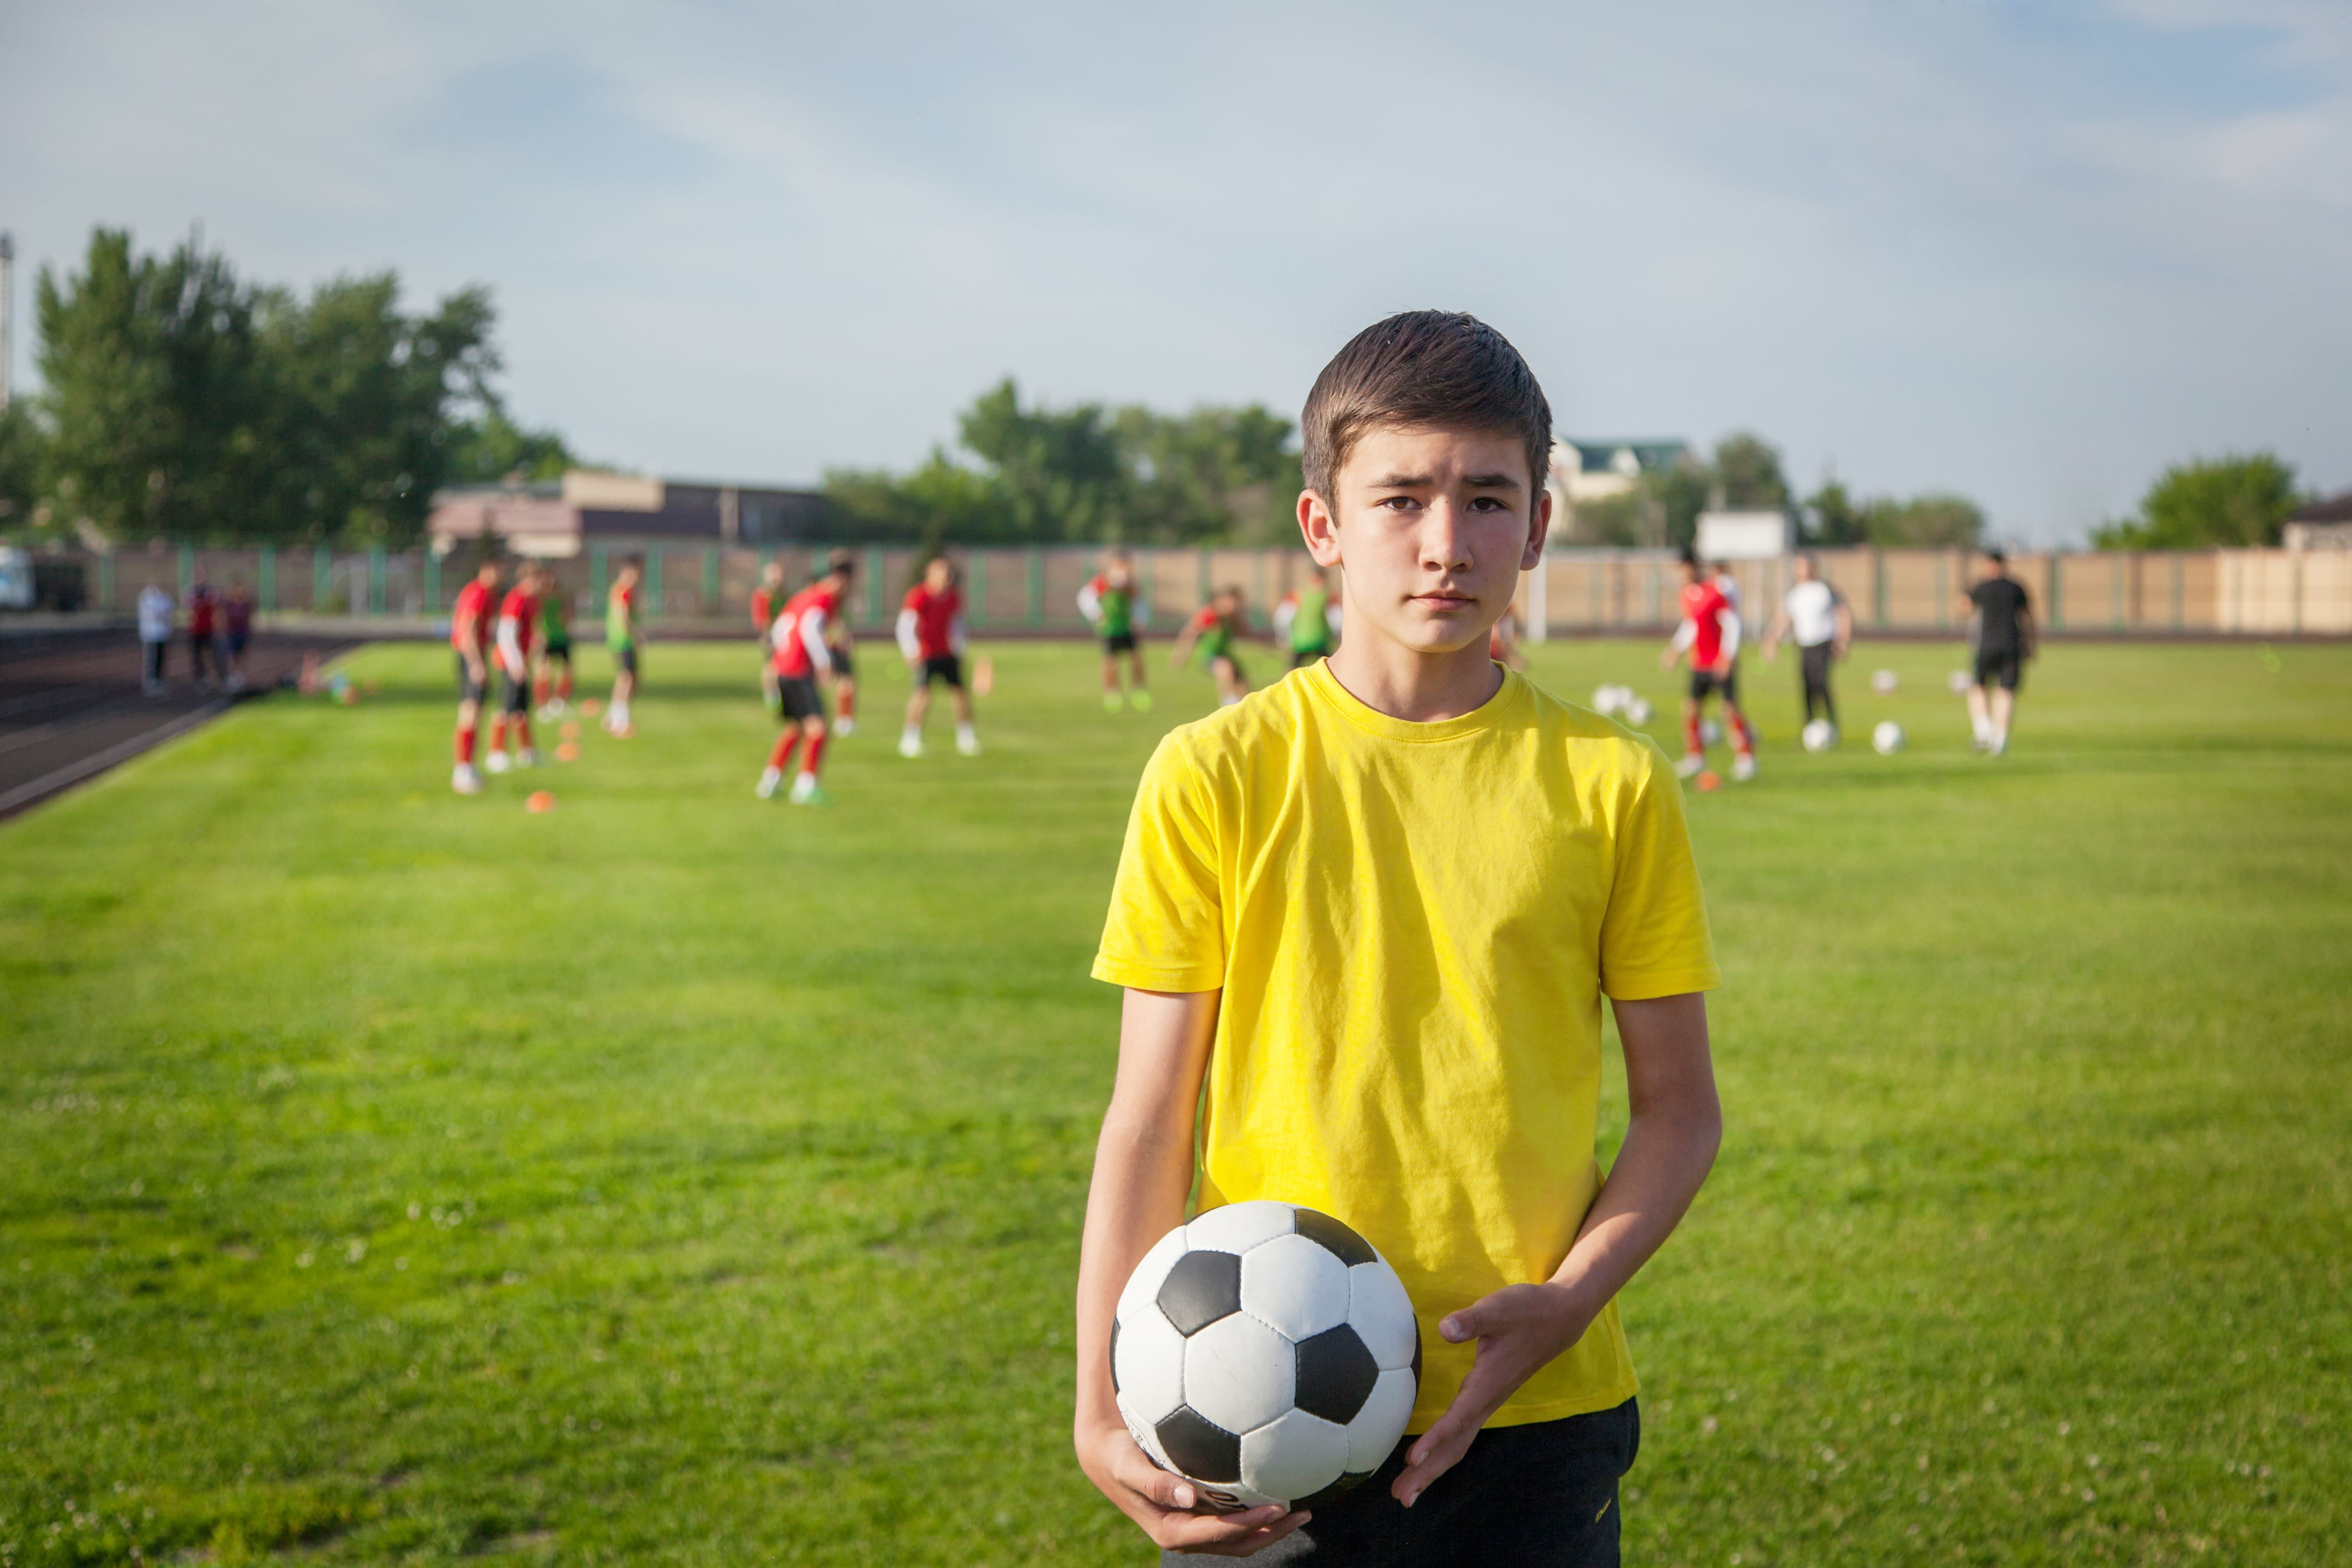 Boy in a yellow shirt on a football field holding a soccer balls.